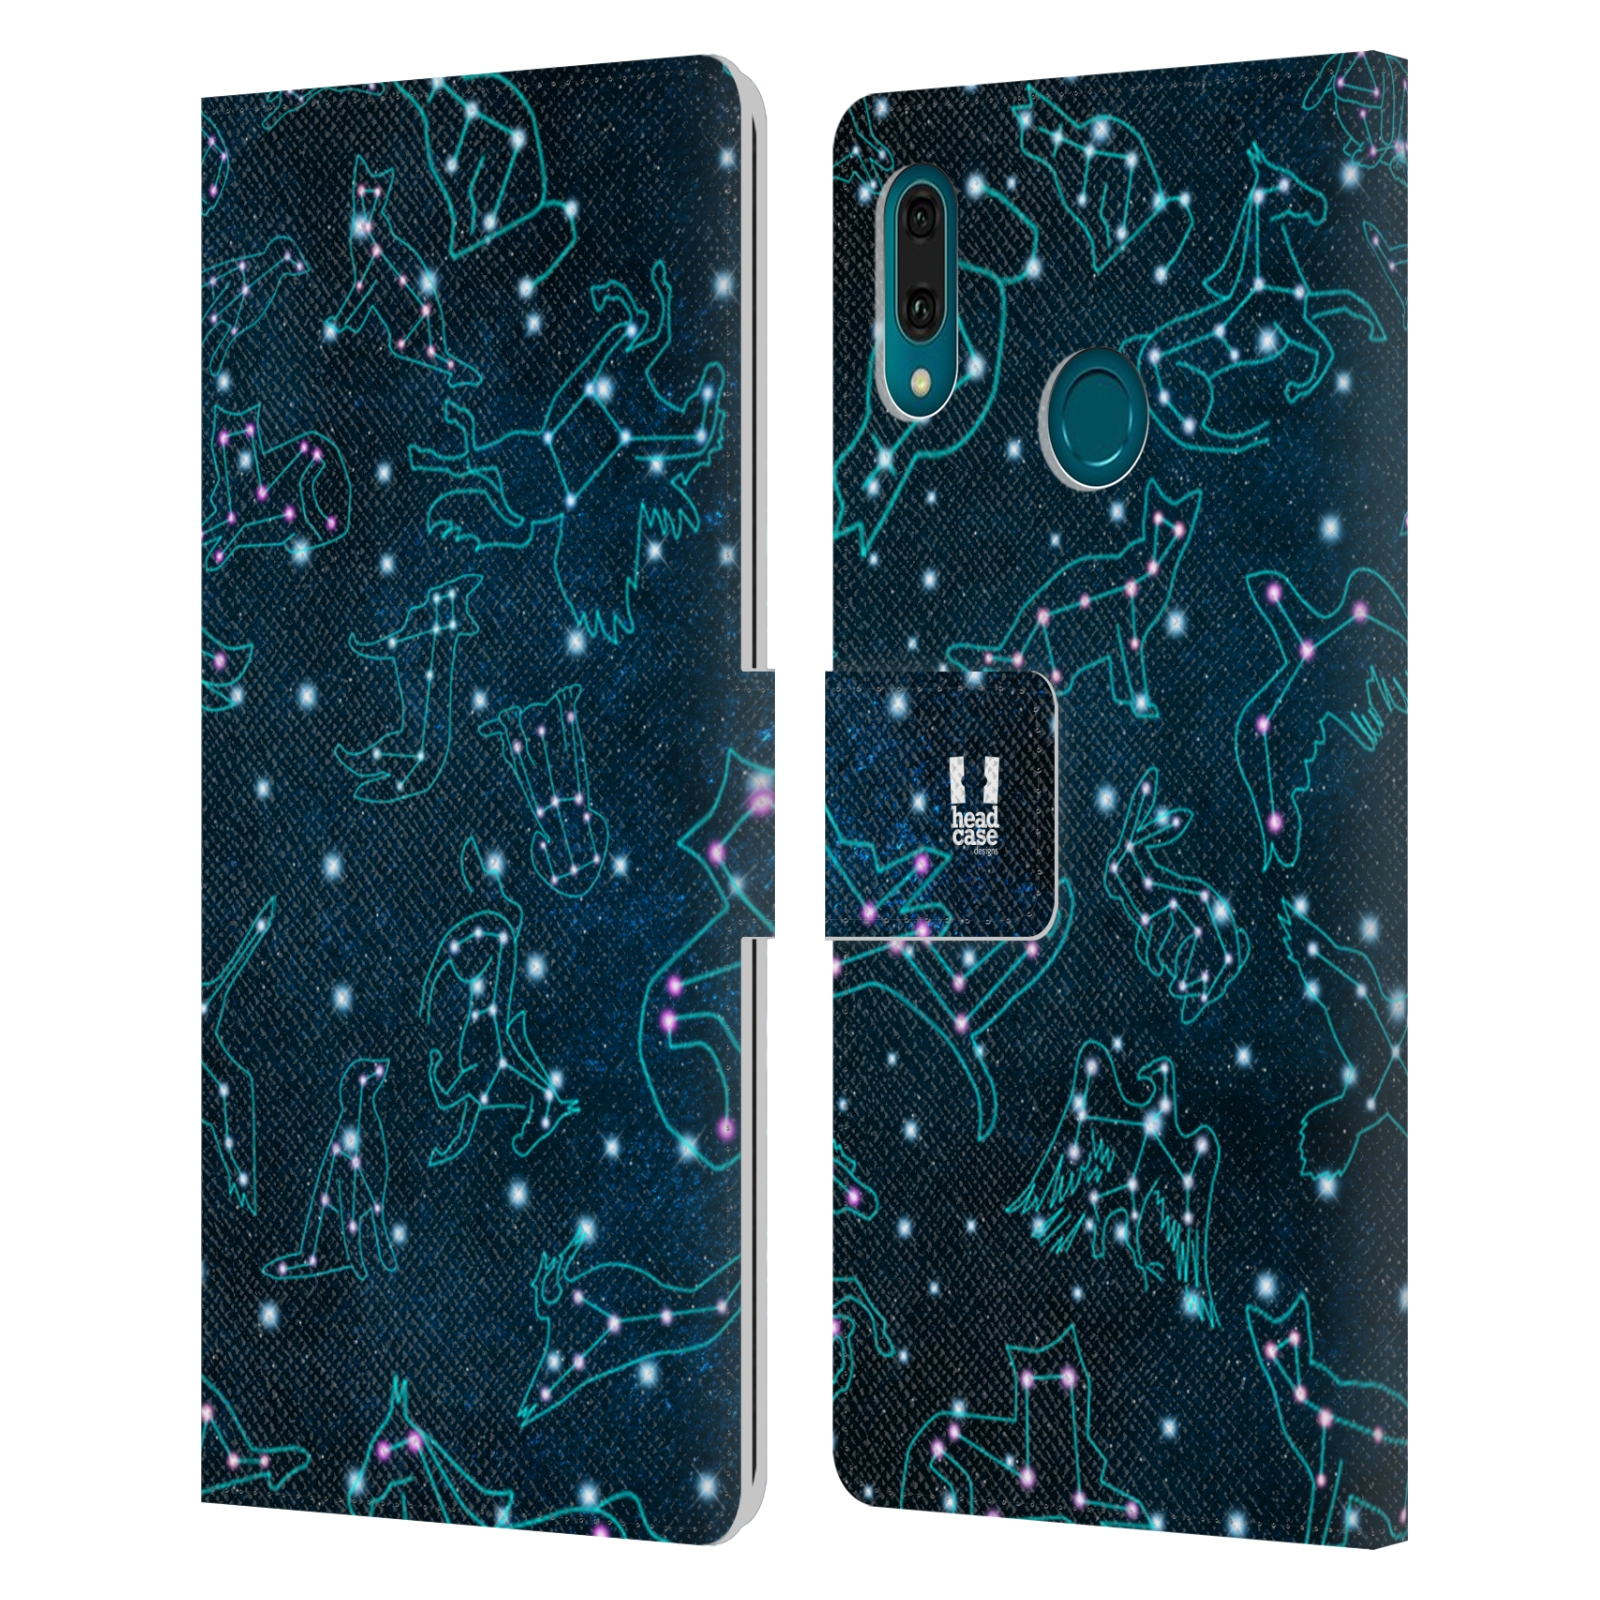 Pouzdro na mobil Huawei Y9 2019 znamení zvíře modrá barva